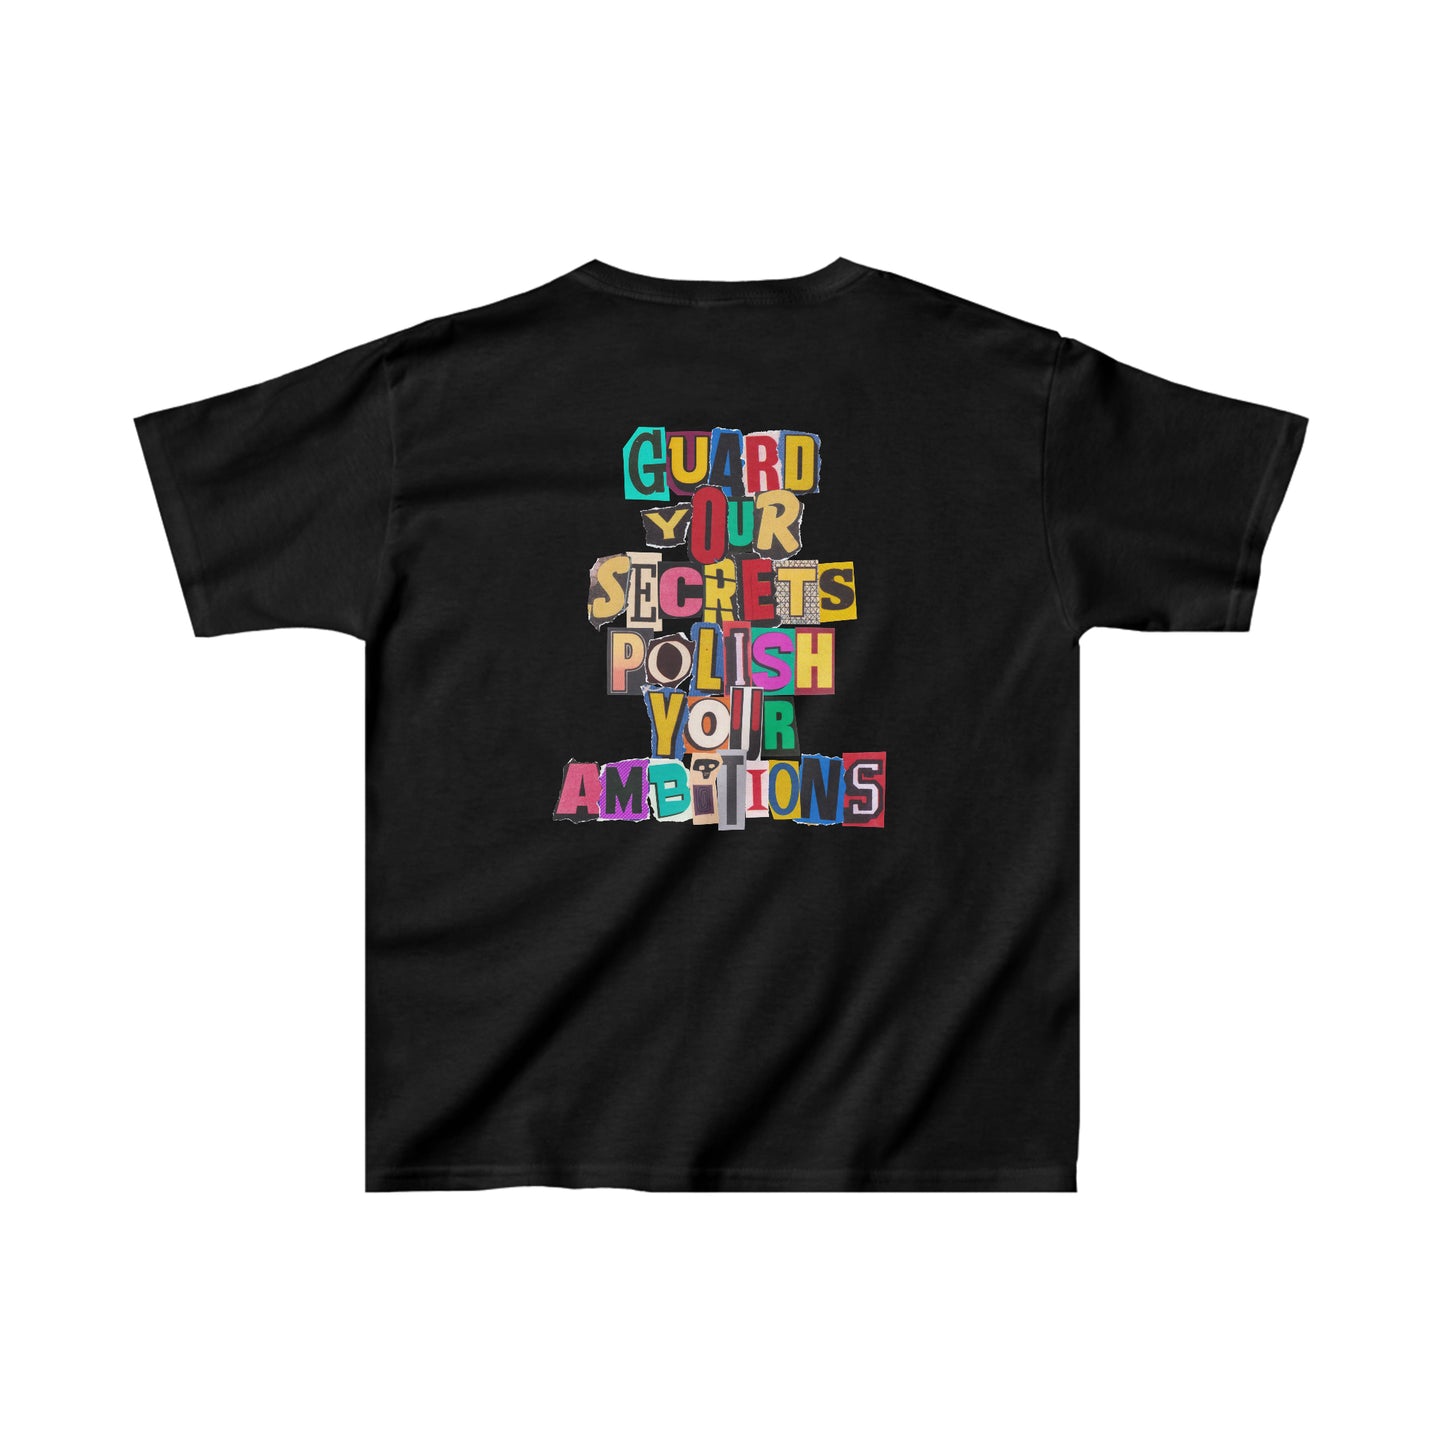 Youth WIY x J Love Vintage T-Shirt